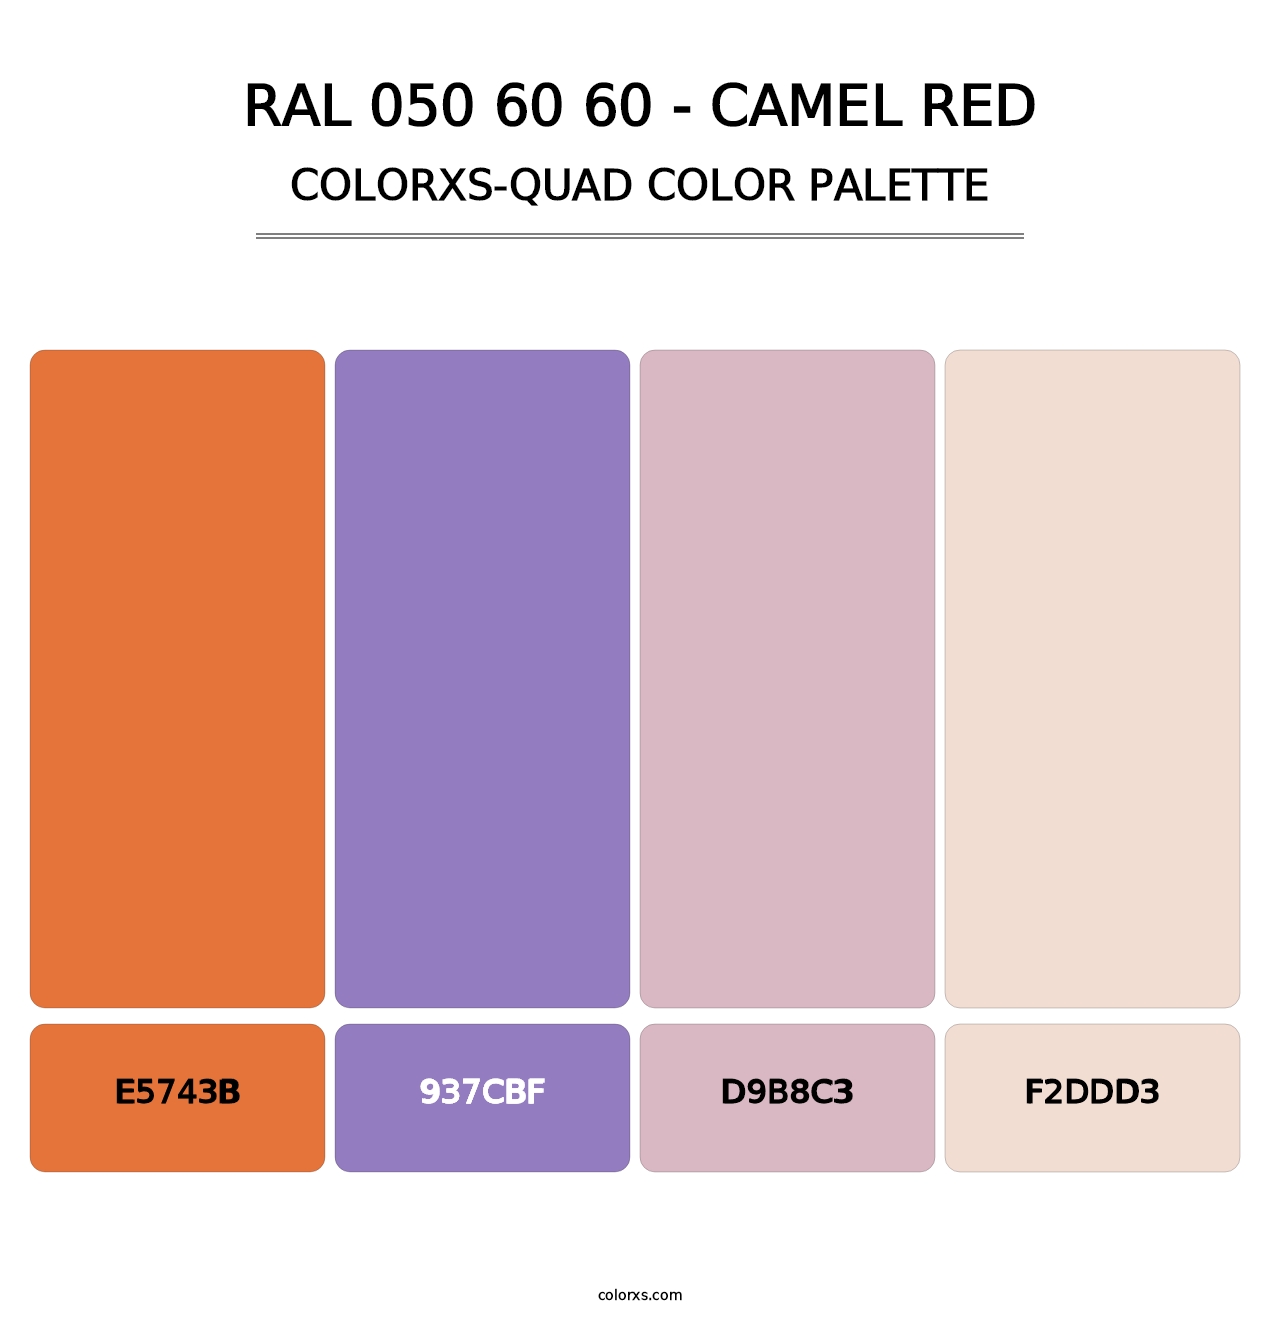 RAL 050 60 60 - Camel Red - Colorxs Quad Palette